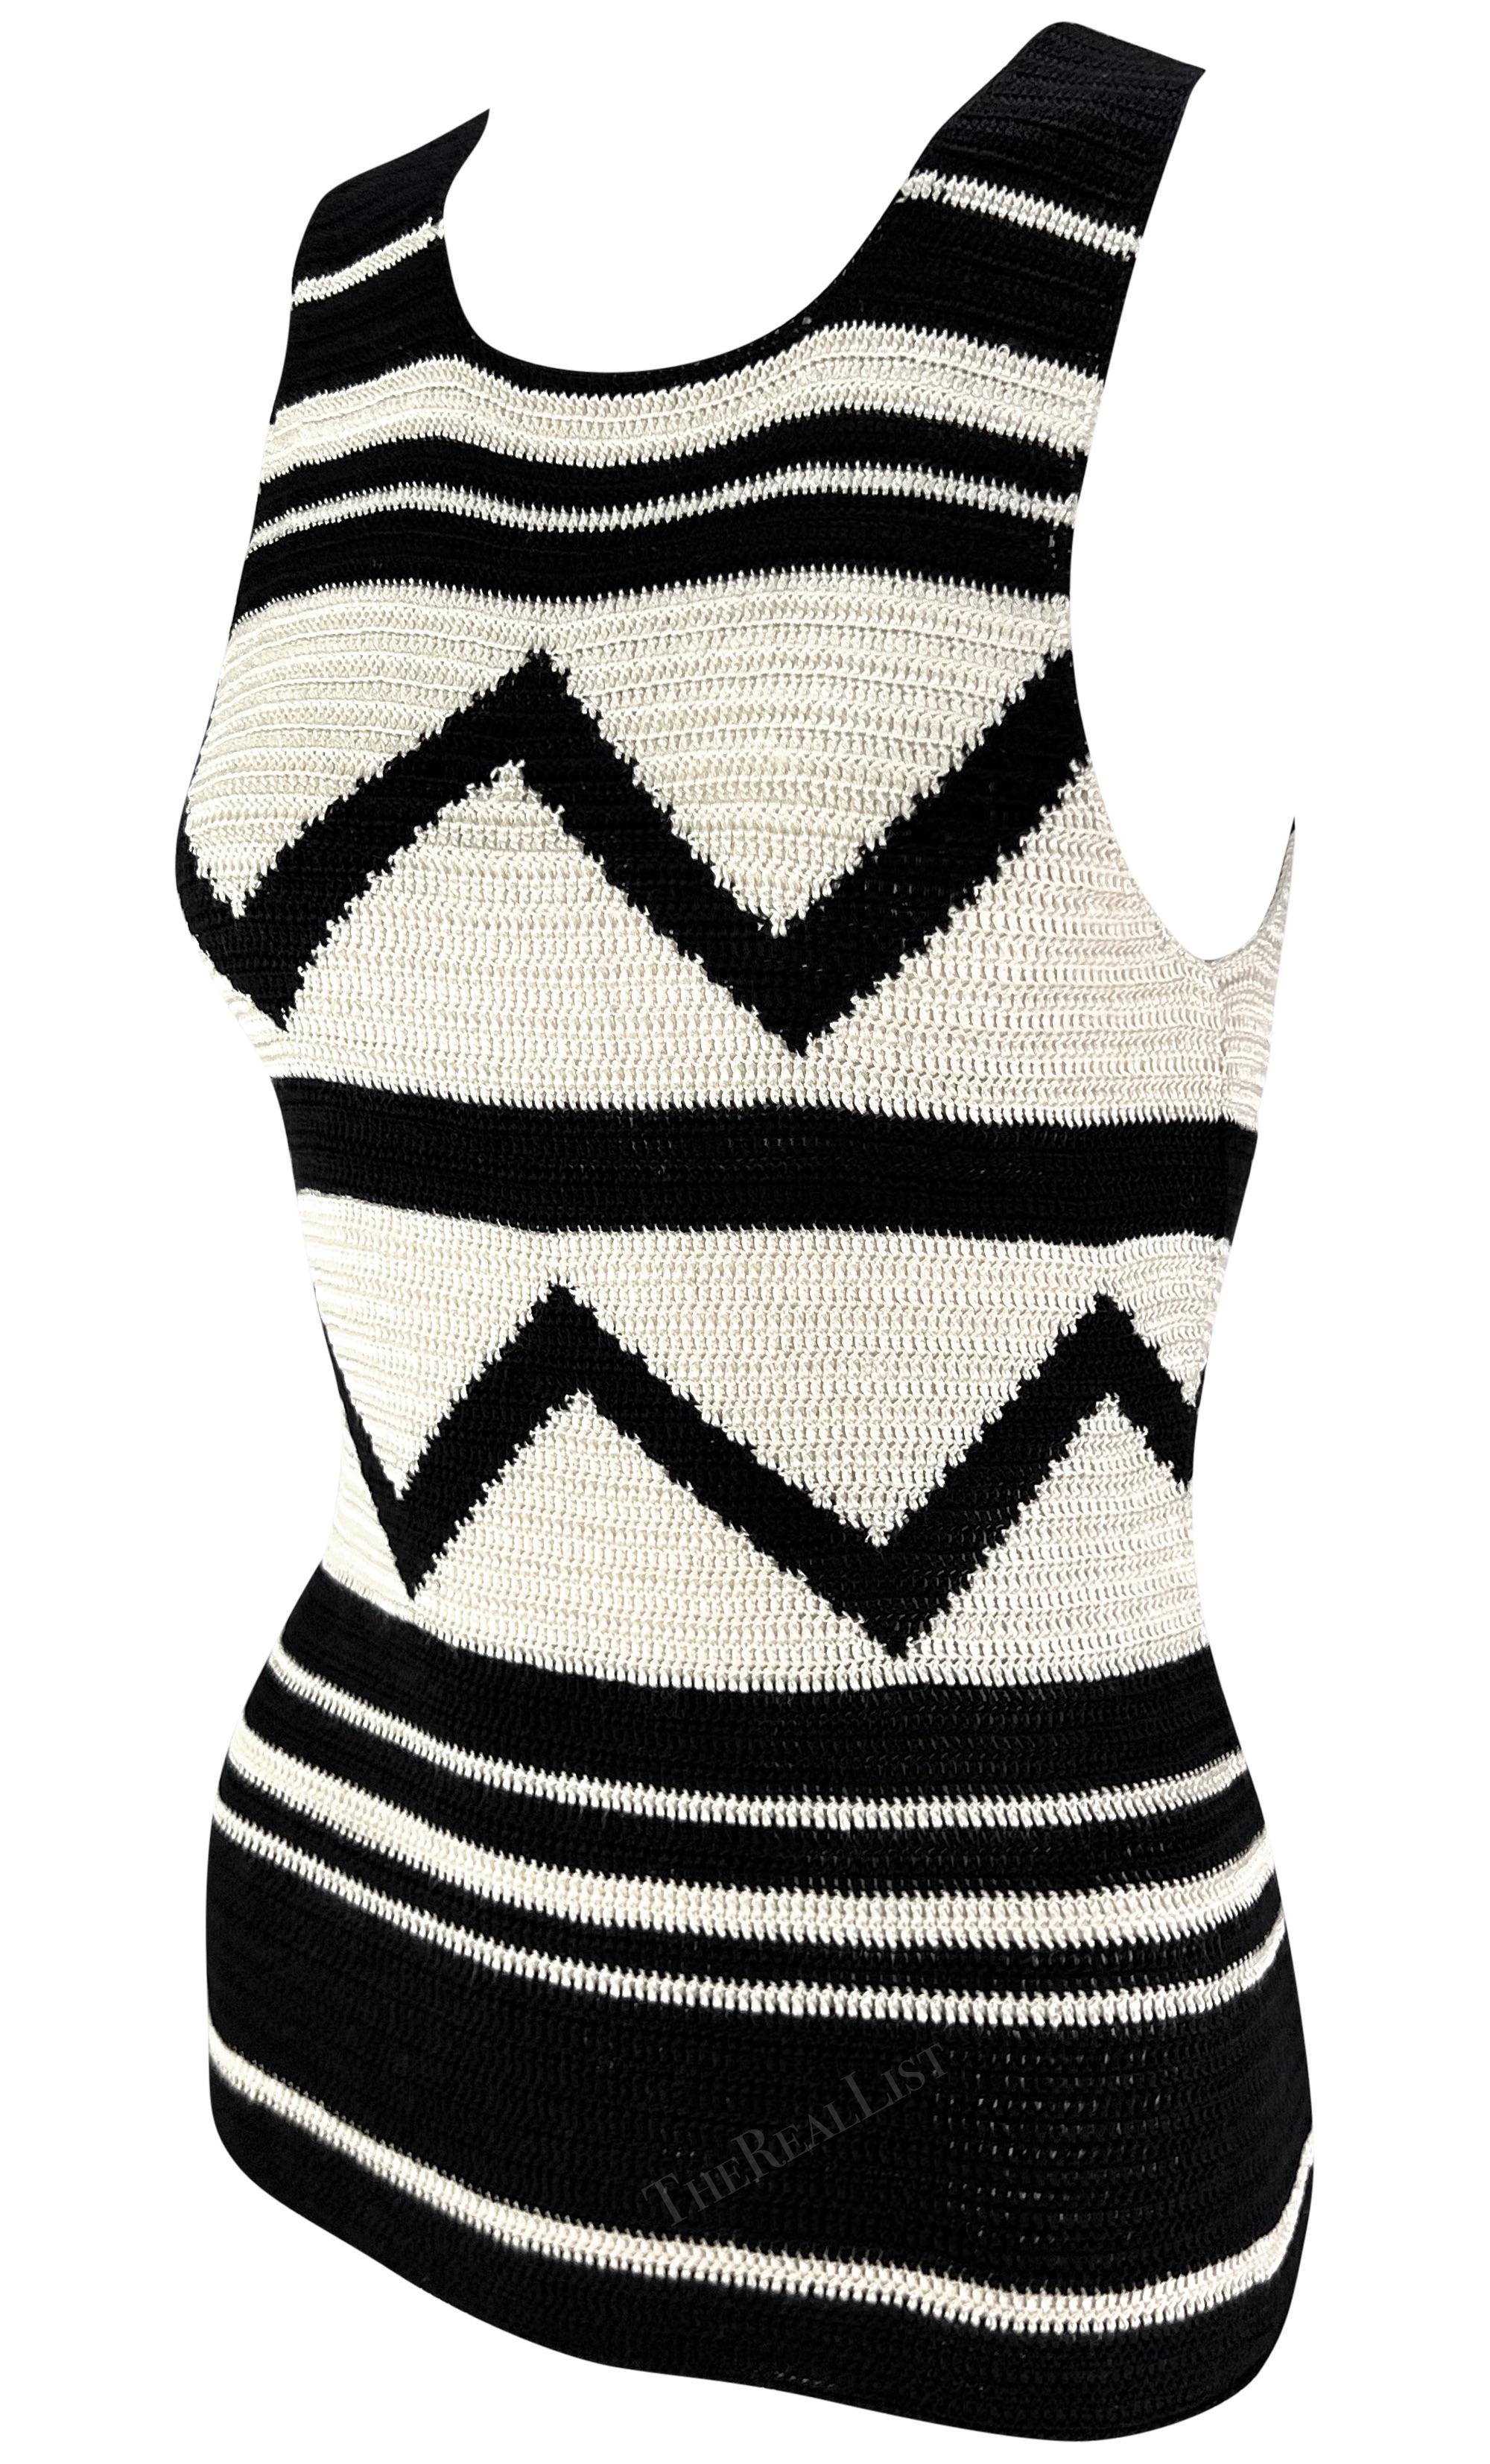 S/S 2001 Ralph Lauren Runway Creme Black Geometric Sheer Knit Silk Sweater Top Excellent état - En vente à West Hollywood, CA